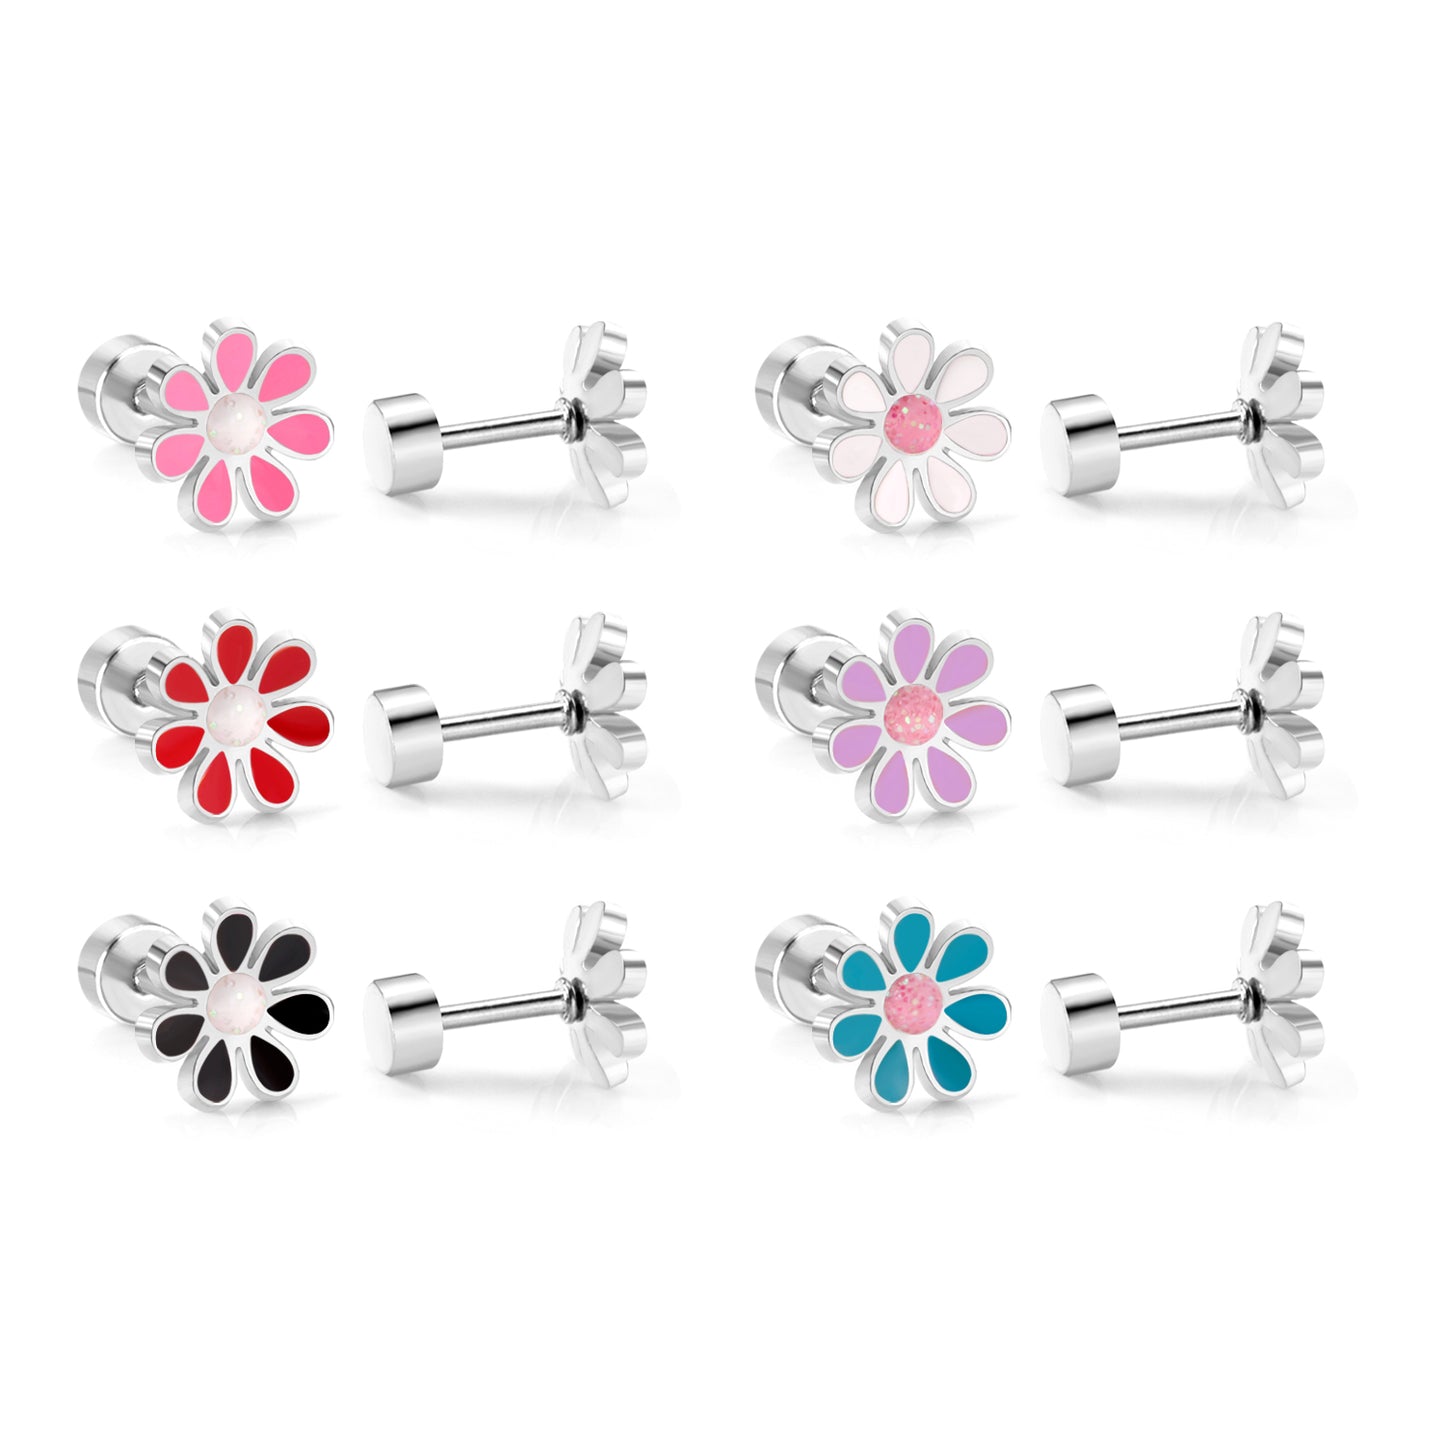 Children's Earrings:  Surgical Steel Black/White Flowers with Screw Backs